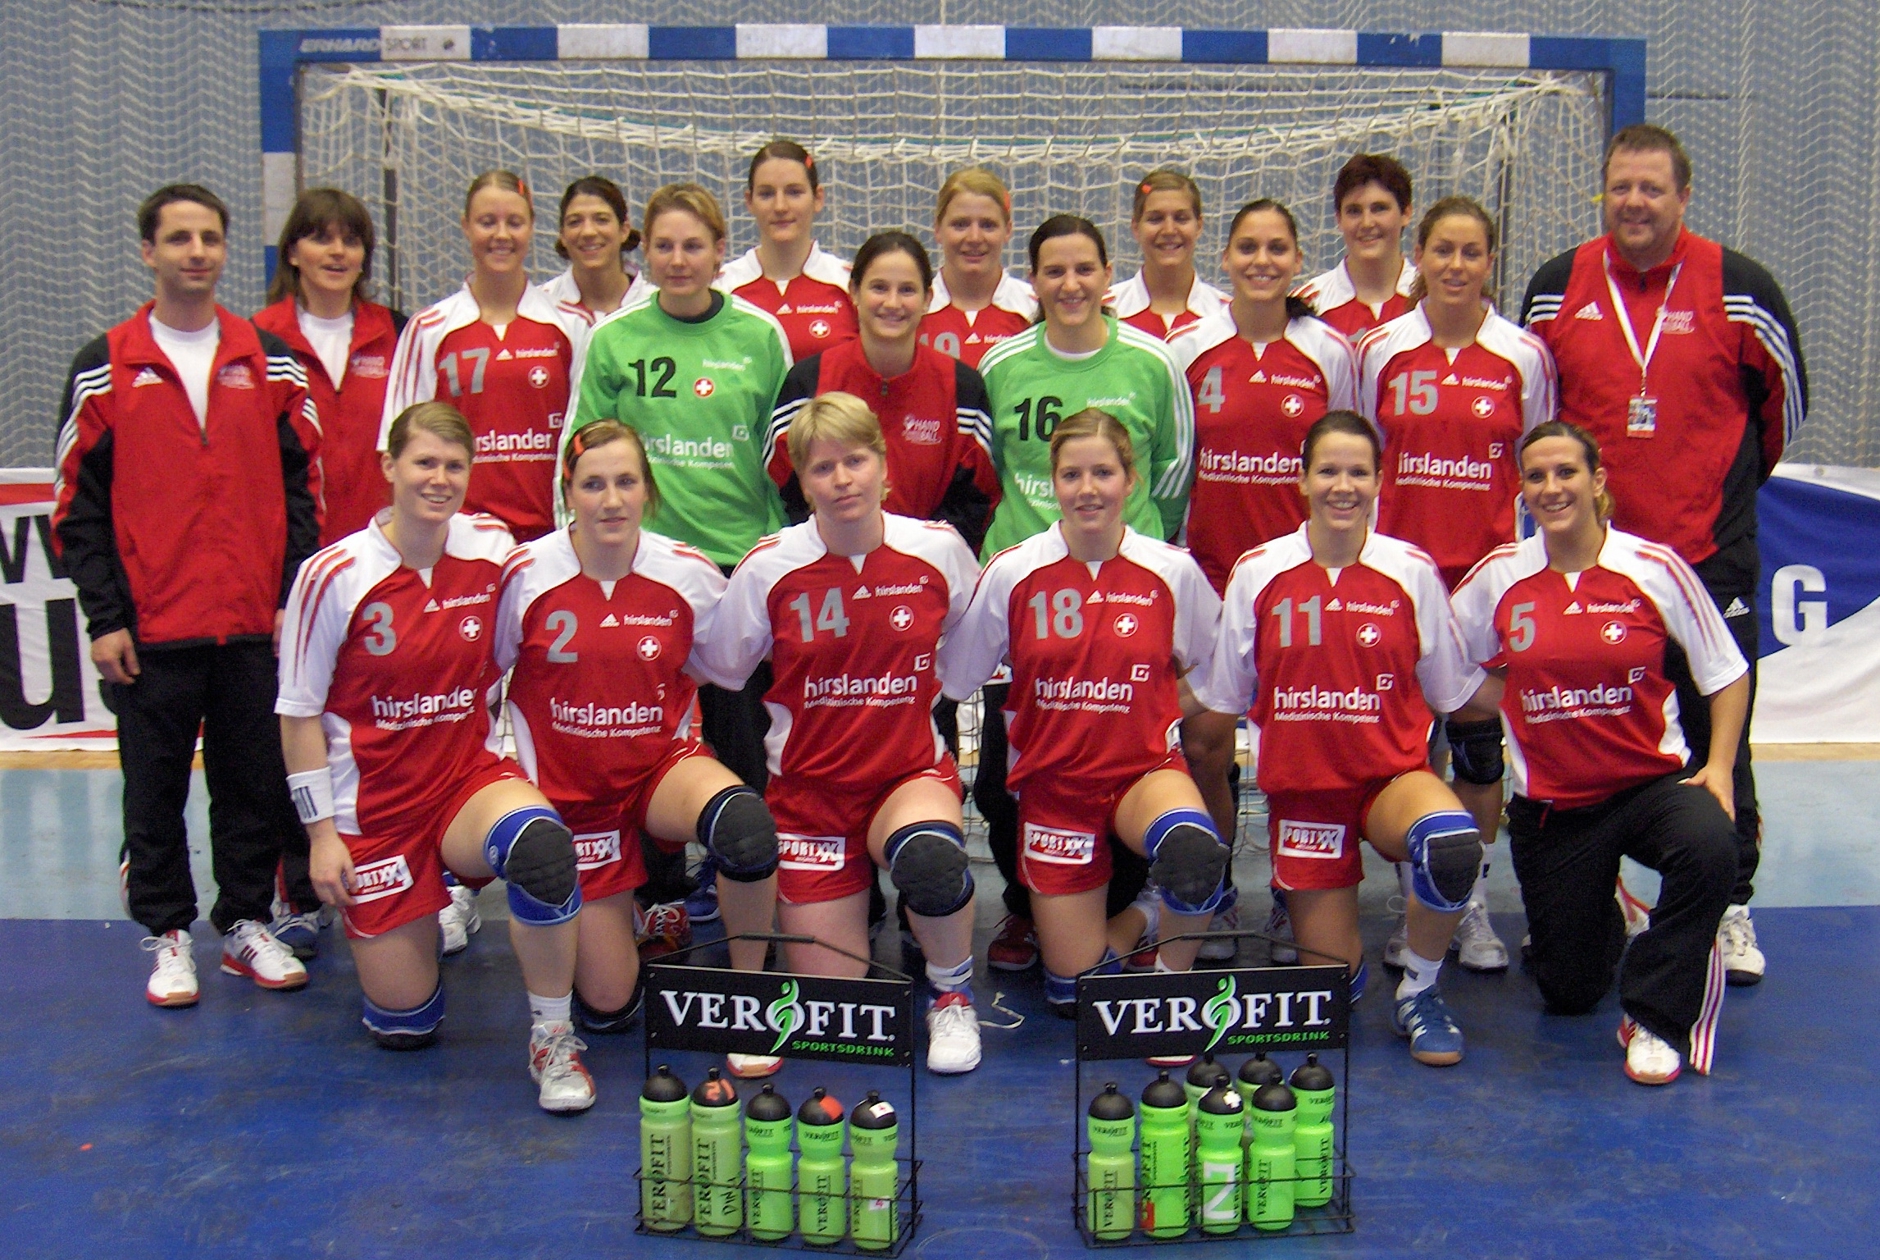 2005-10-29 Teamfoto Frauen-Nati.JPG